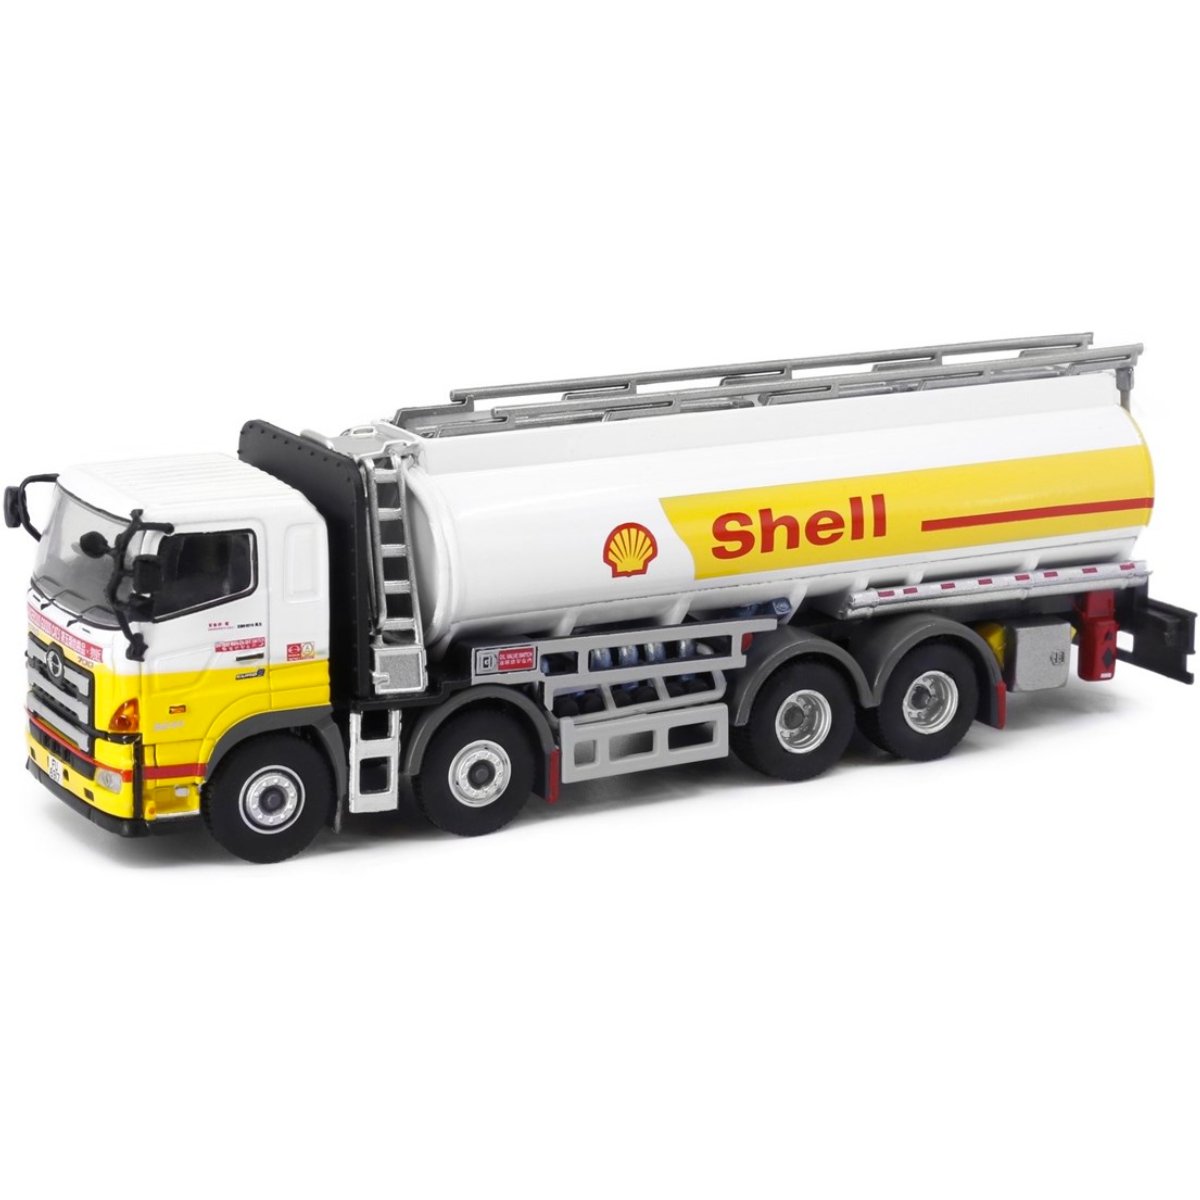 Tiny Models Hino 700 Shell Oil Tanker Truck (1:76 Scale) - Phillips Hobbies